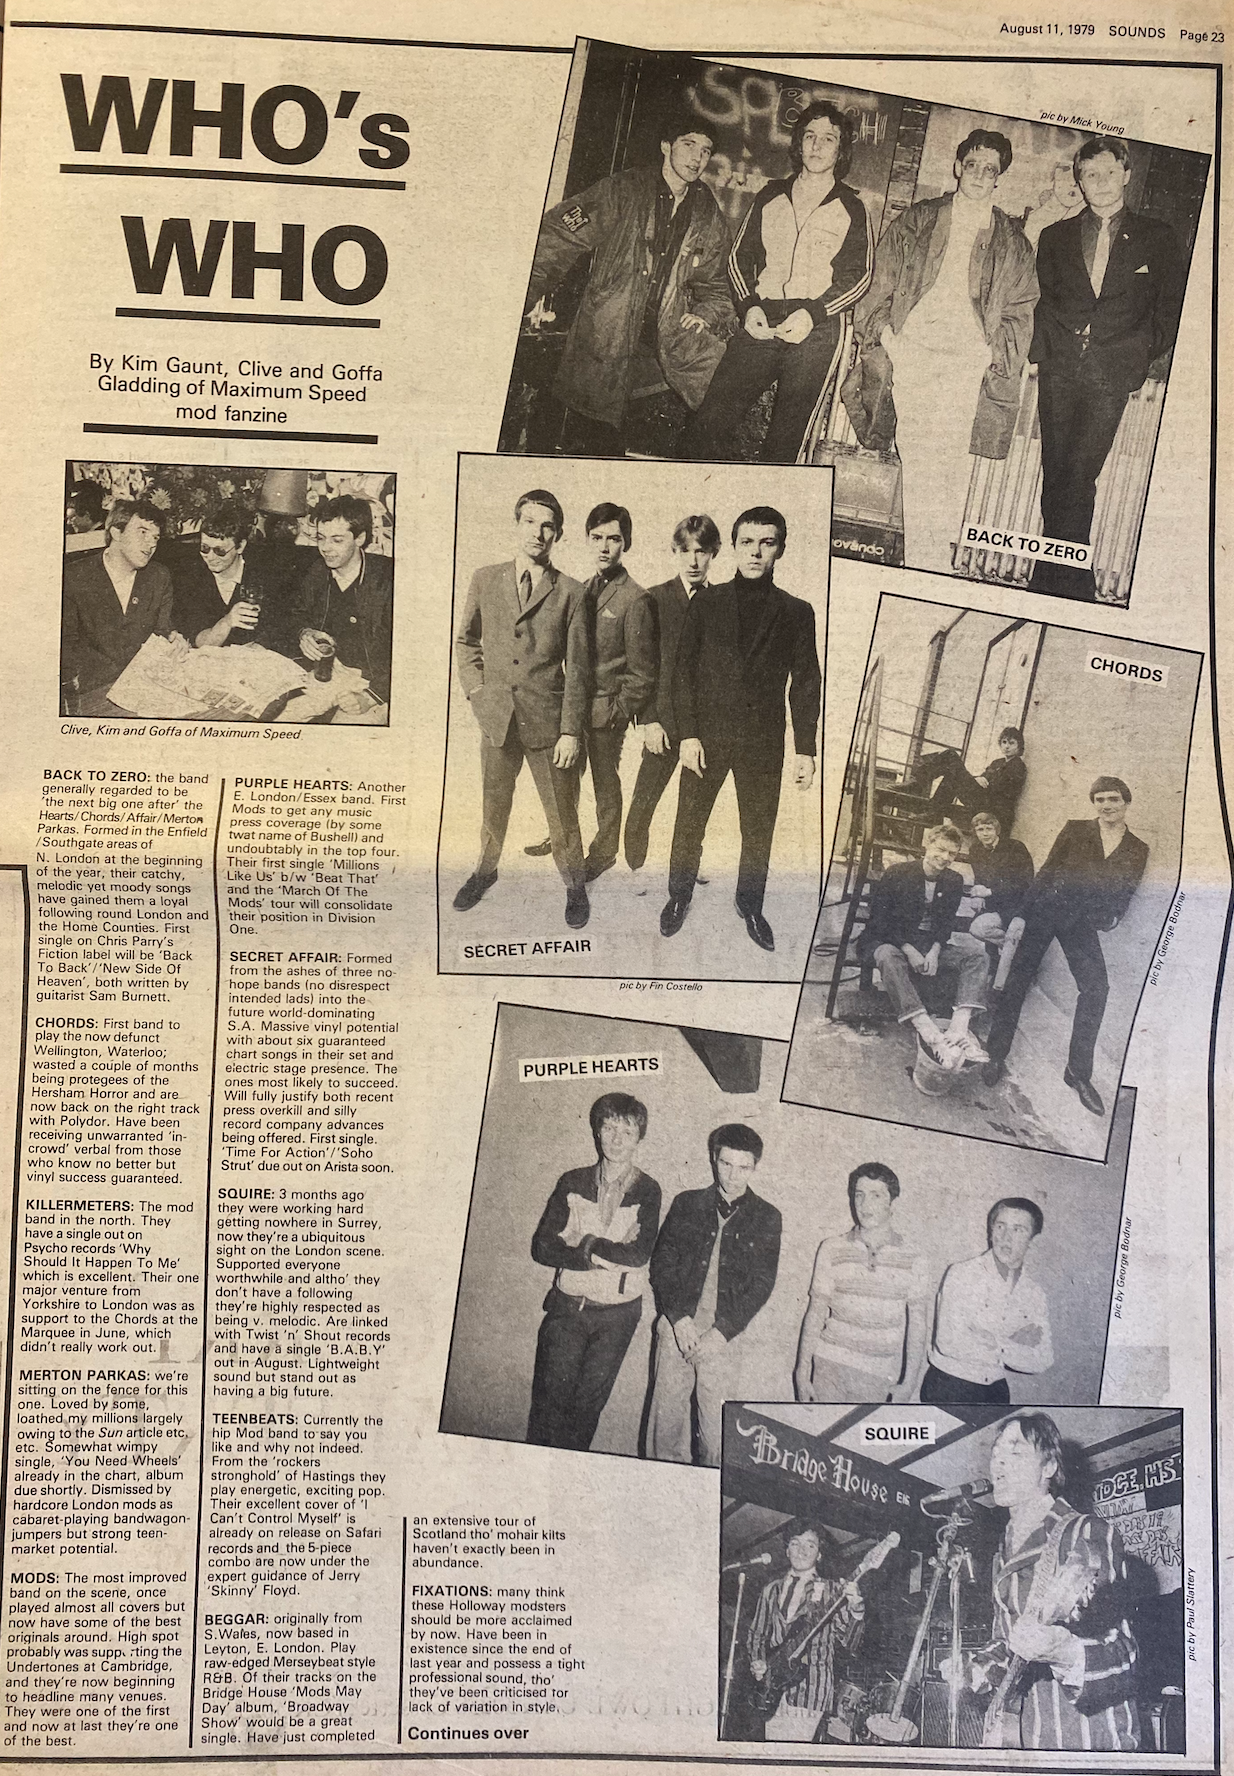 Anglozine Mod Revival Sounds magazine August 1979